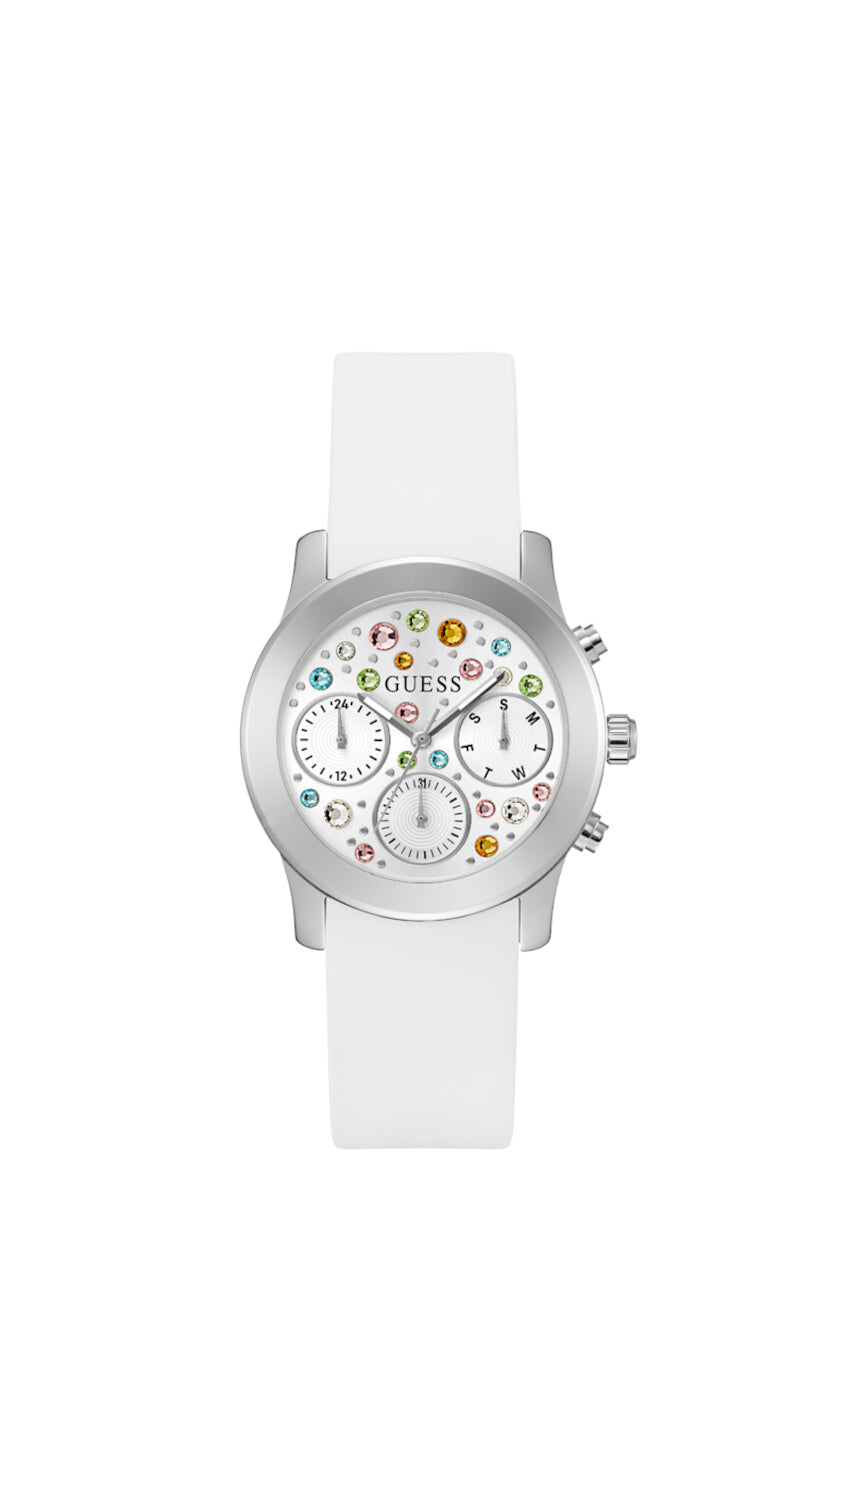 Reloj Guess de Mujer Fantasia color blanco